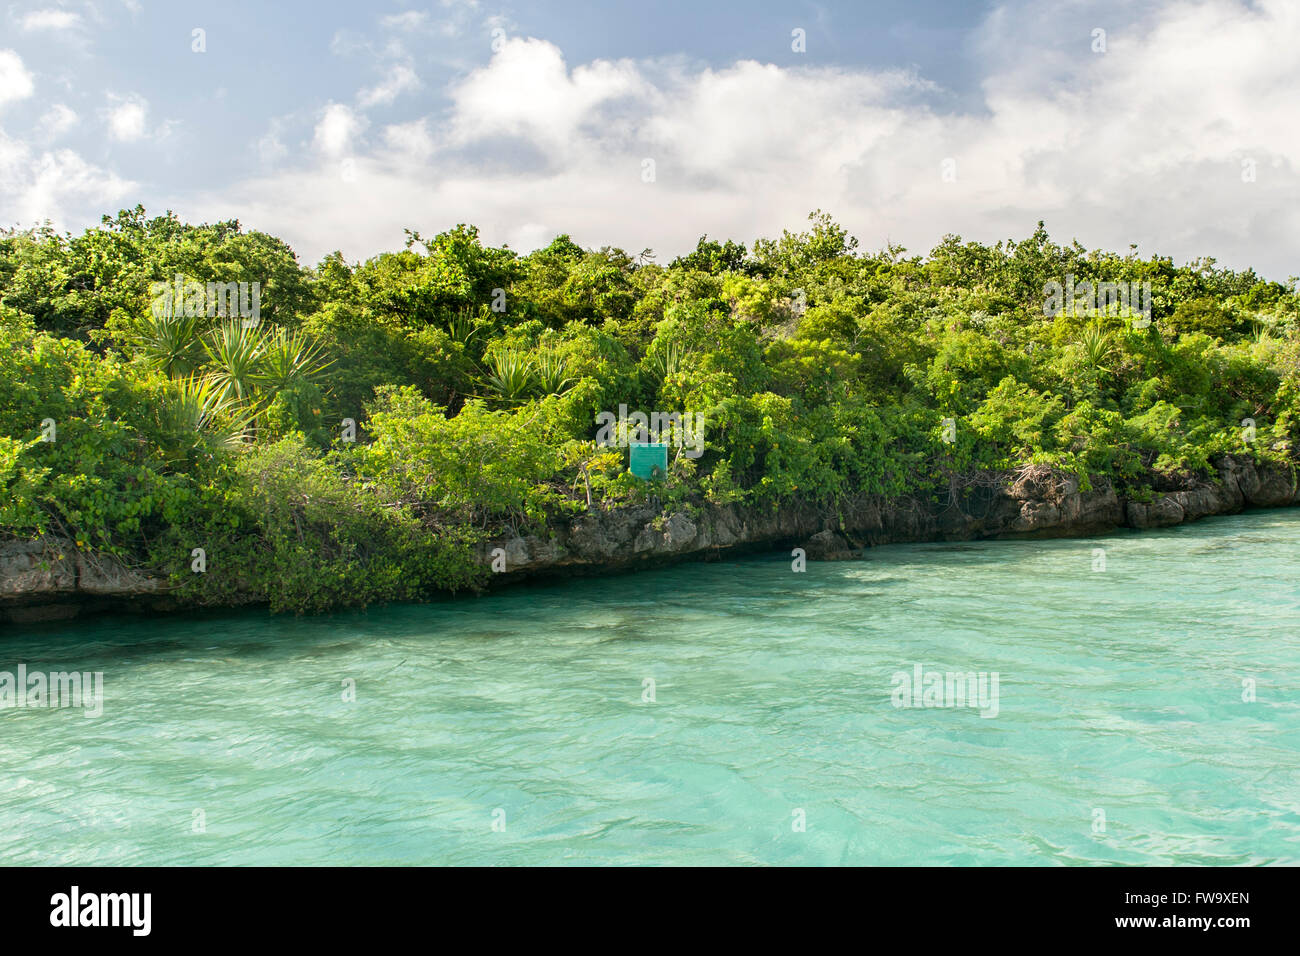 The coastline and verdant vegetation of the islet of Ile Aux Aigrettes off the southeast coast of Mauritius. Stock Photo